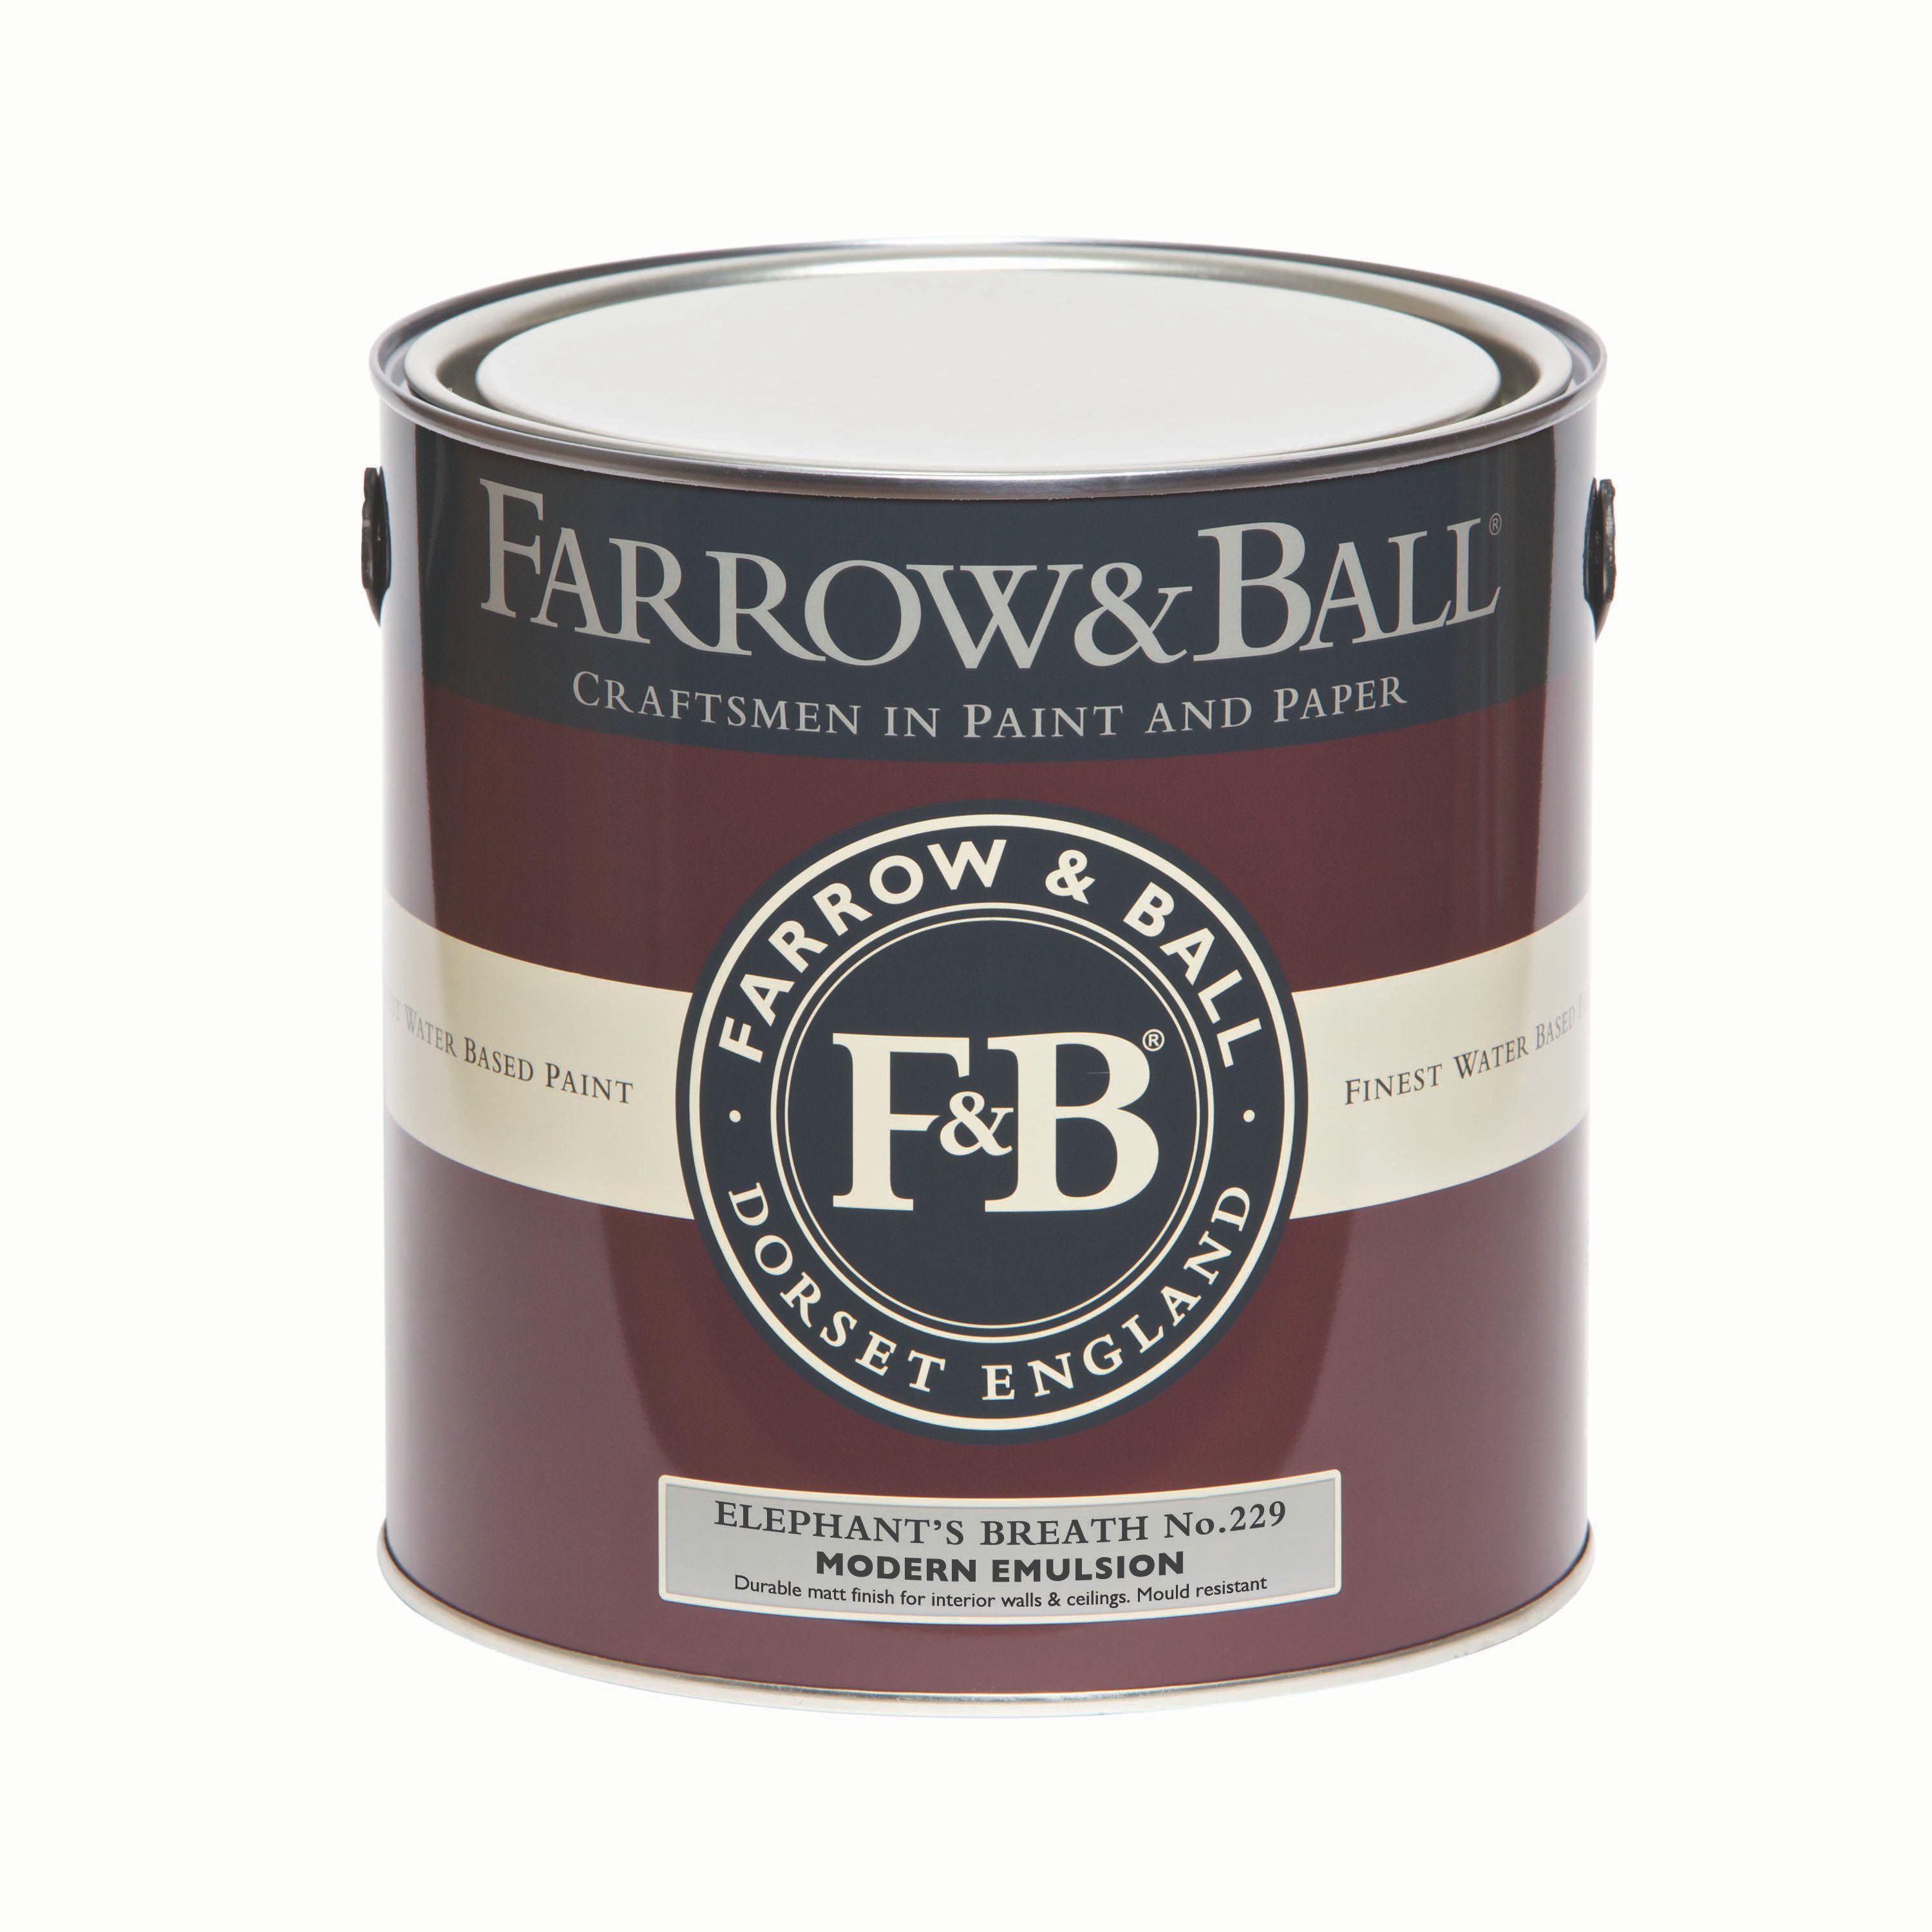 Farrow & Ball Modern Elephant's breath No.229 Matt Emulsion paint, 2.5L